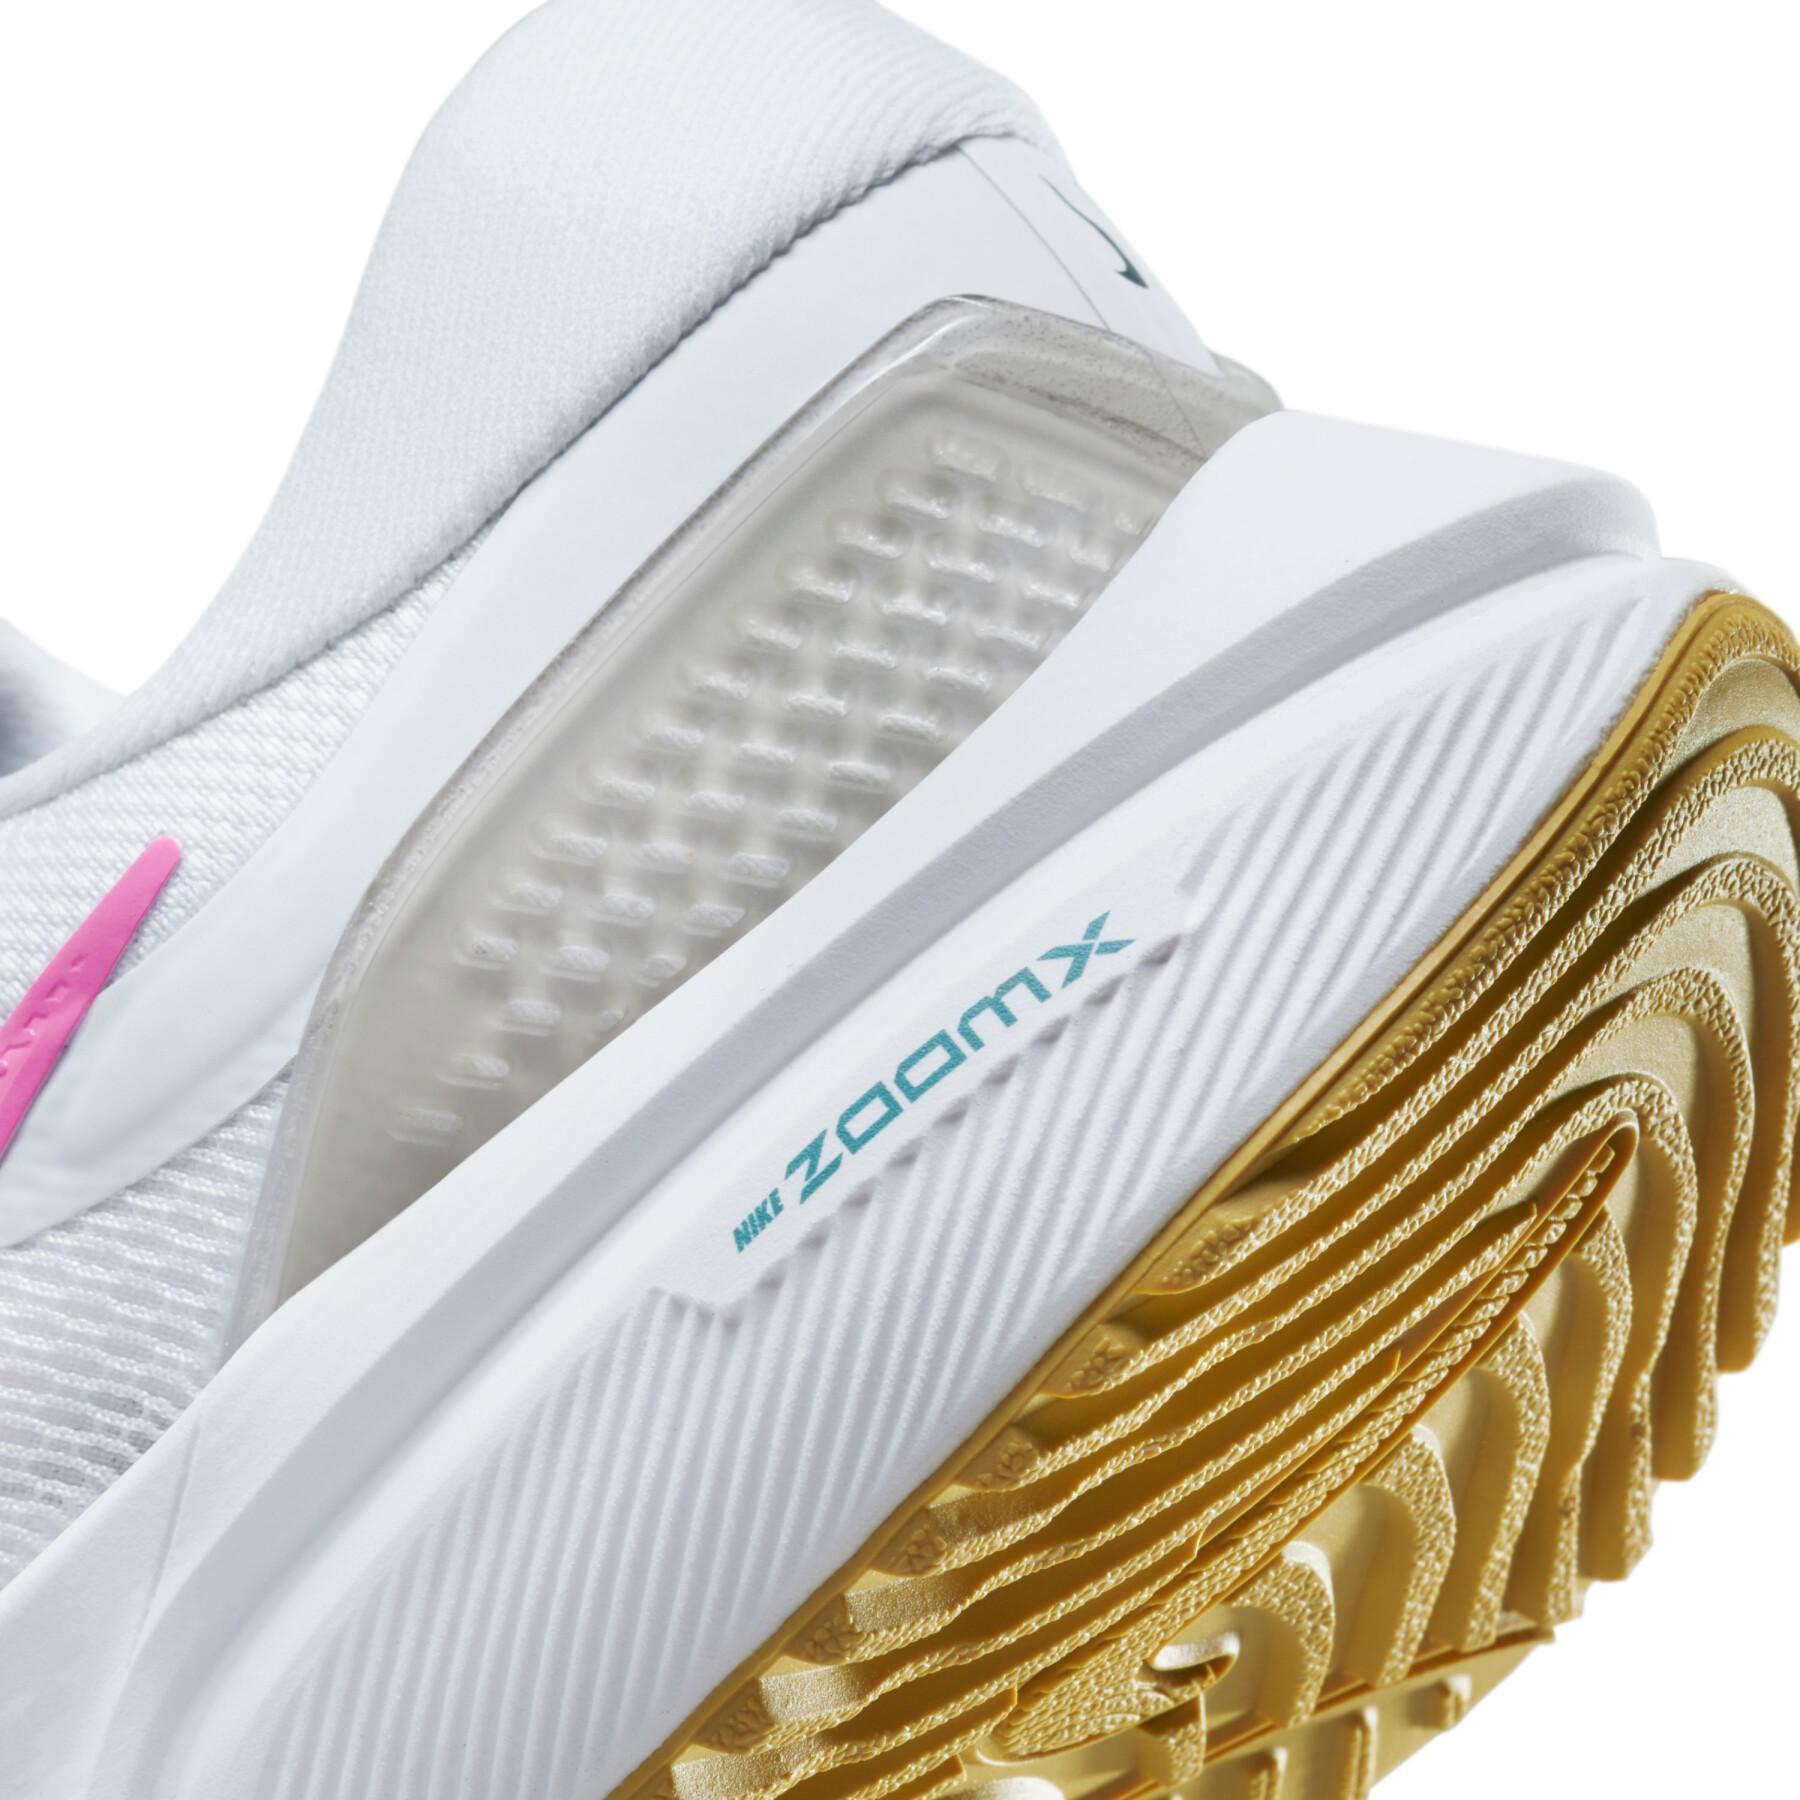 Sapatos de mulher running Nike Air Zoom Vomero 16